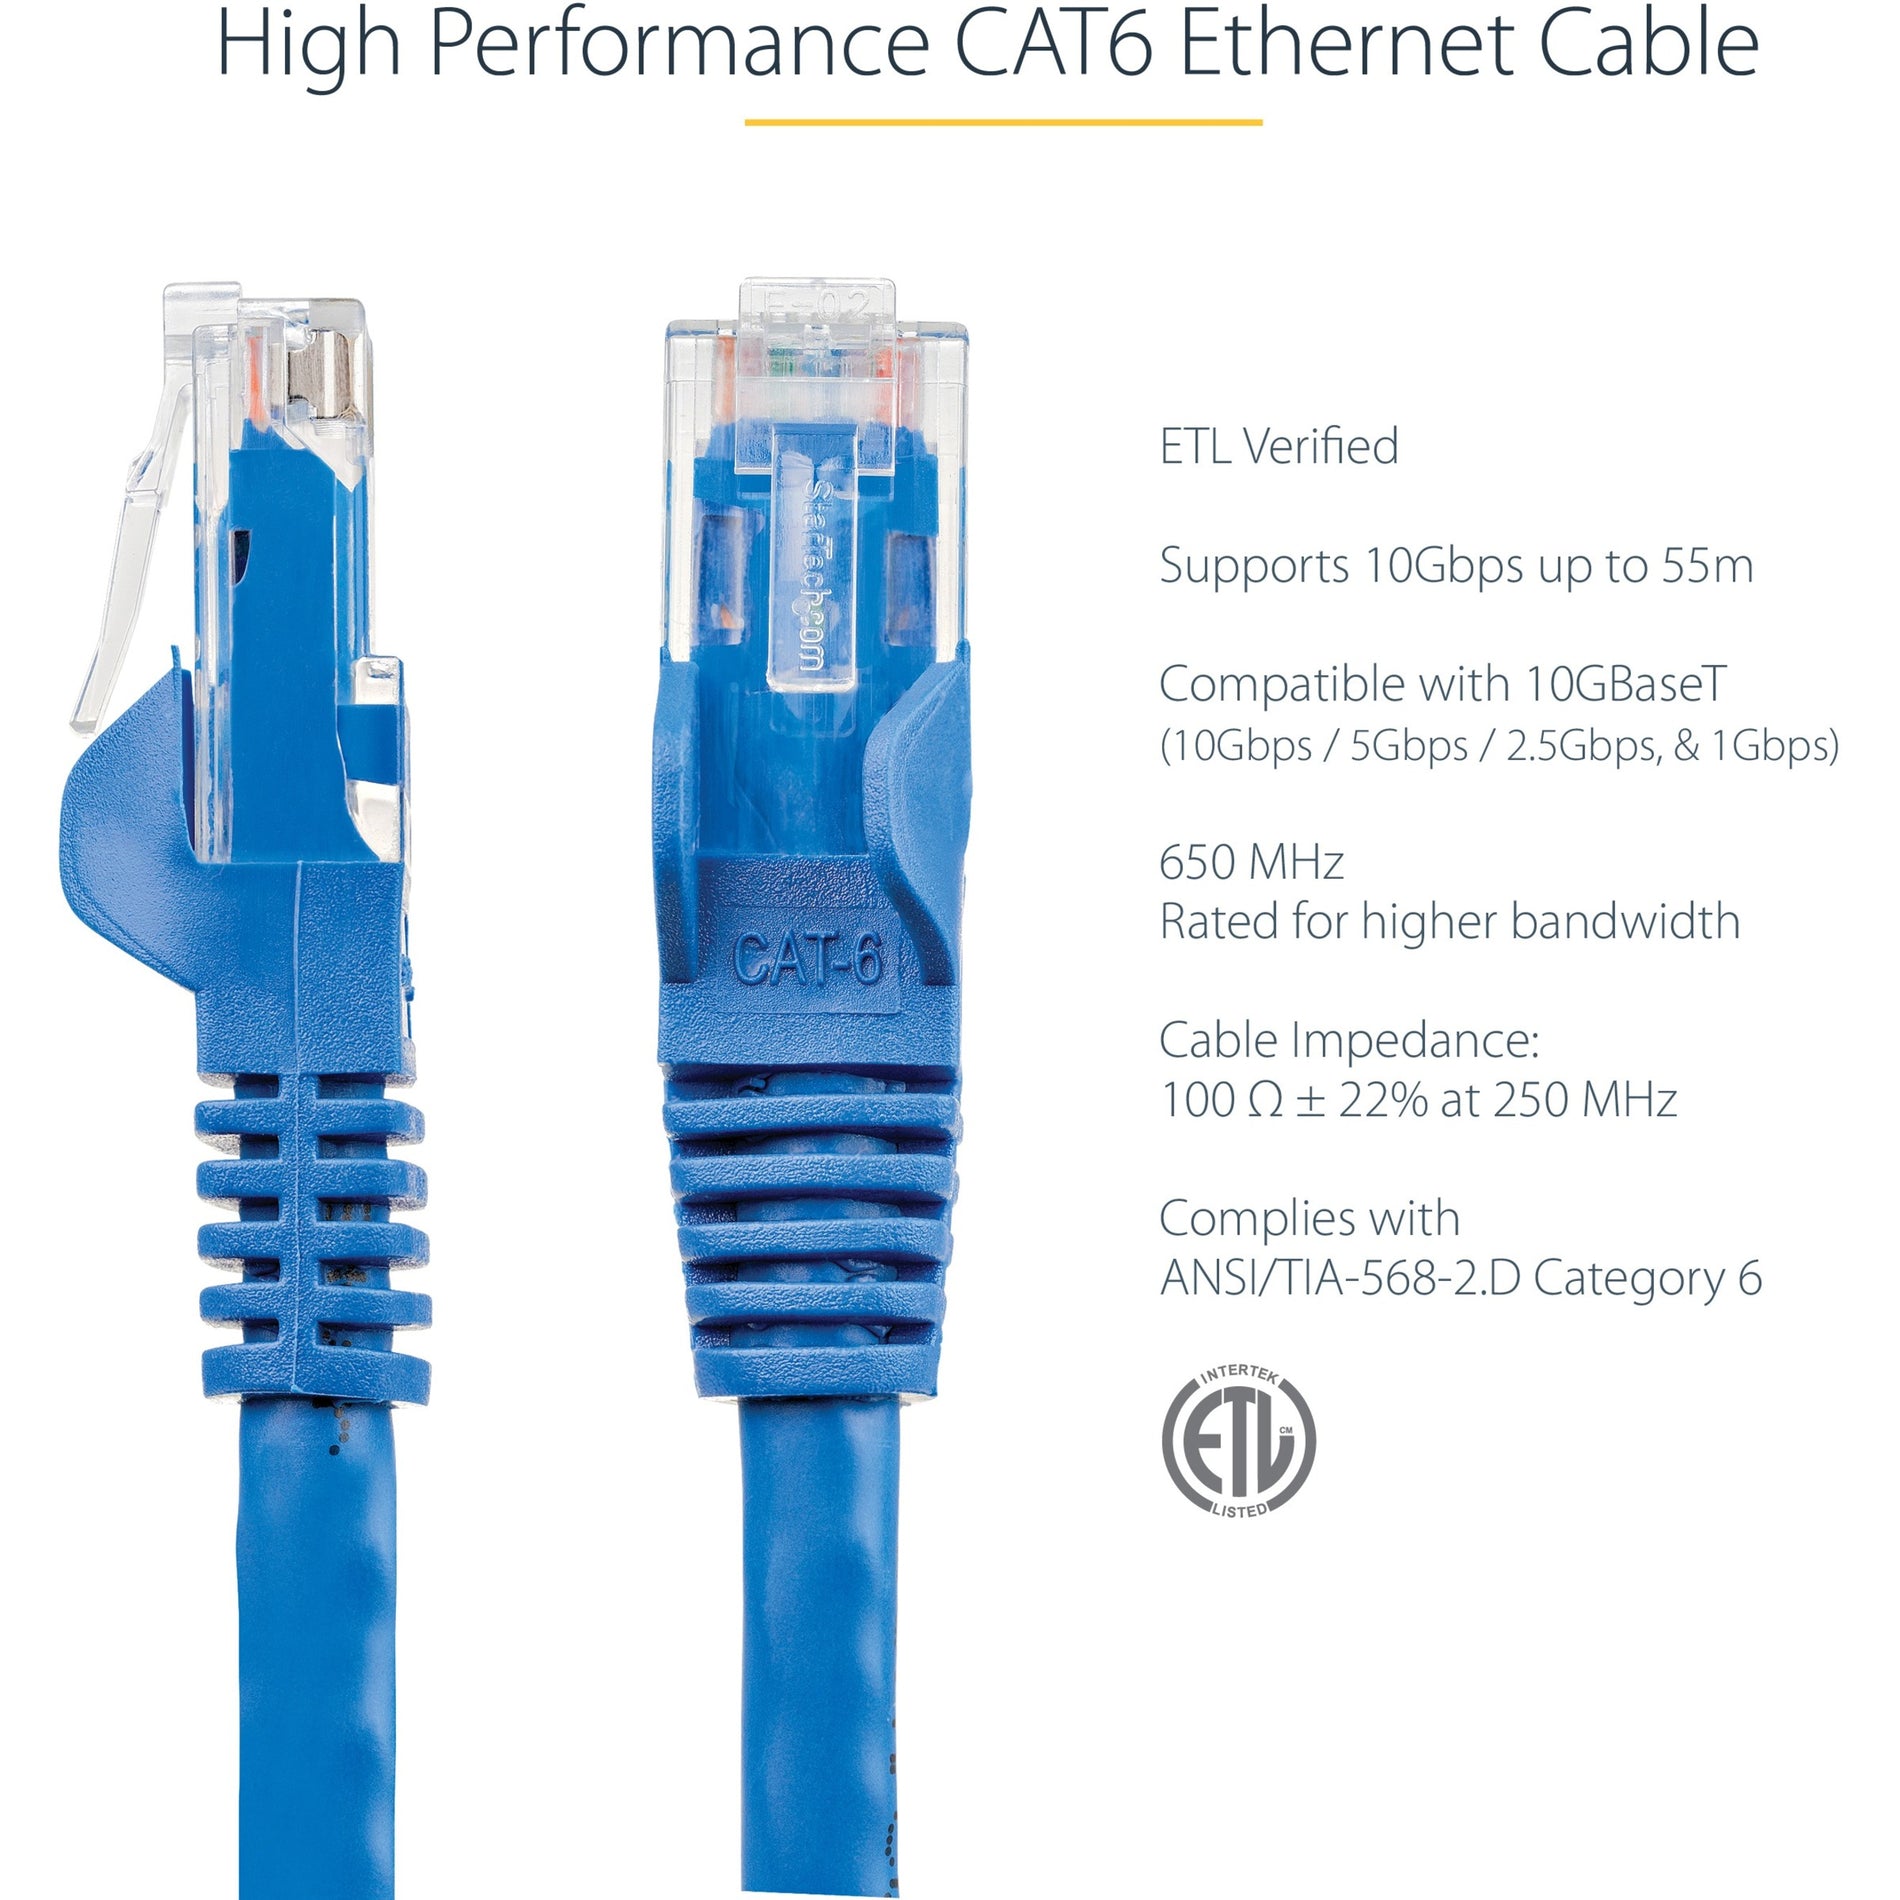 StarTech.com N6PATCH30BL Cat. 6 Network Cable, 30ft Blue Ethernet Cable, Snagless RJ45 Connectors